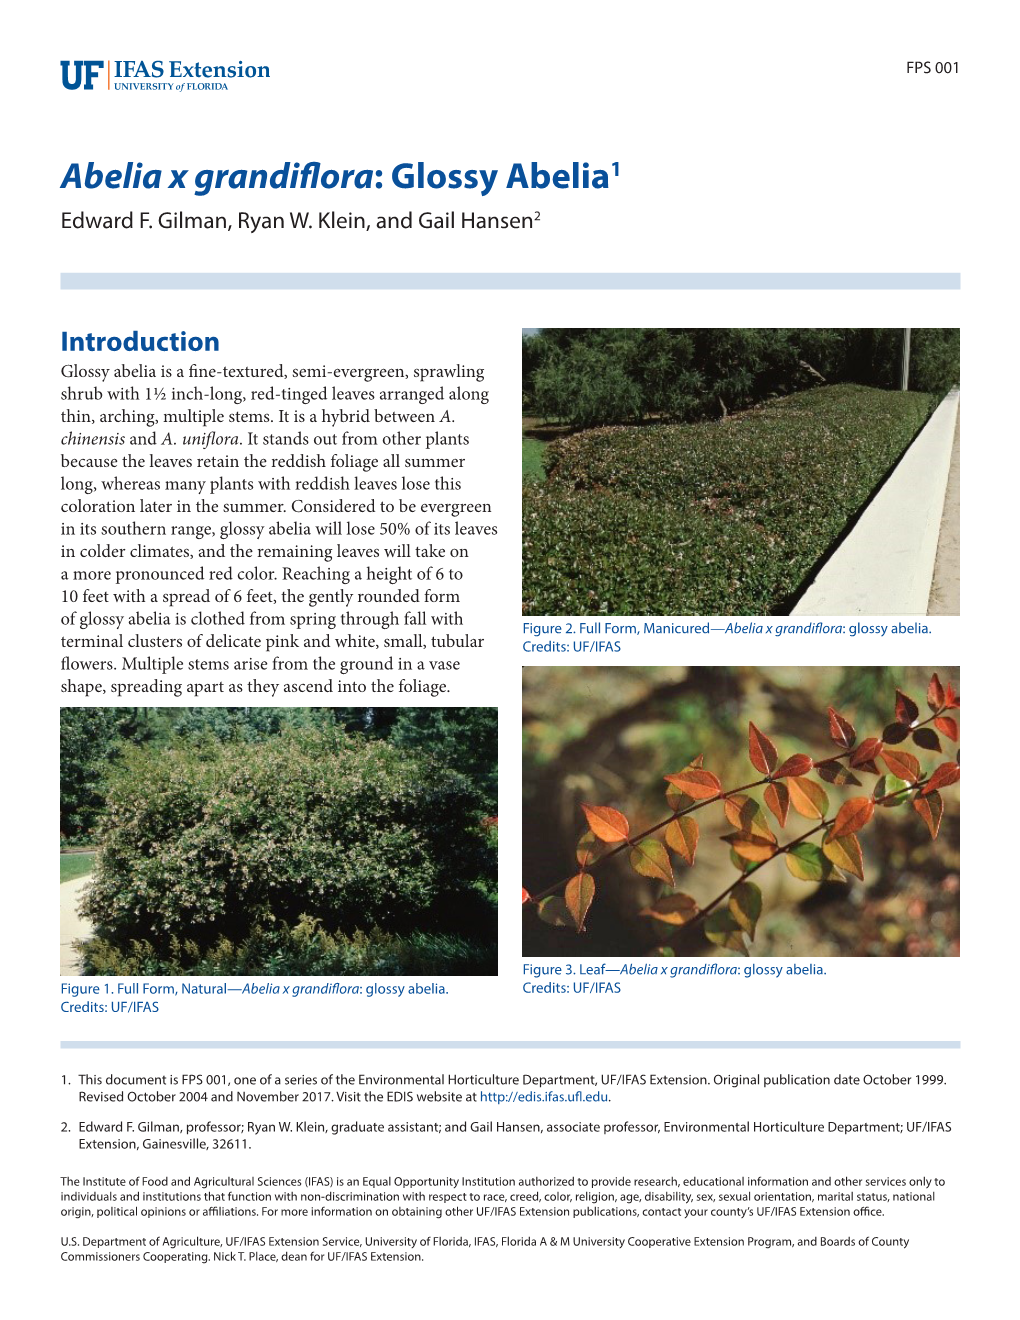 Abelia X Grandiflora: Glossy Abelia1 Edward F